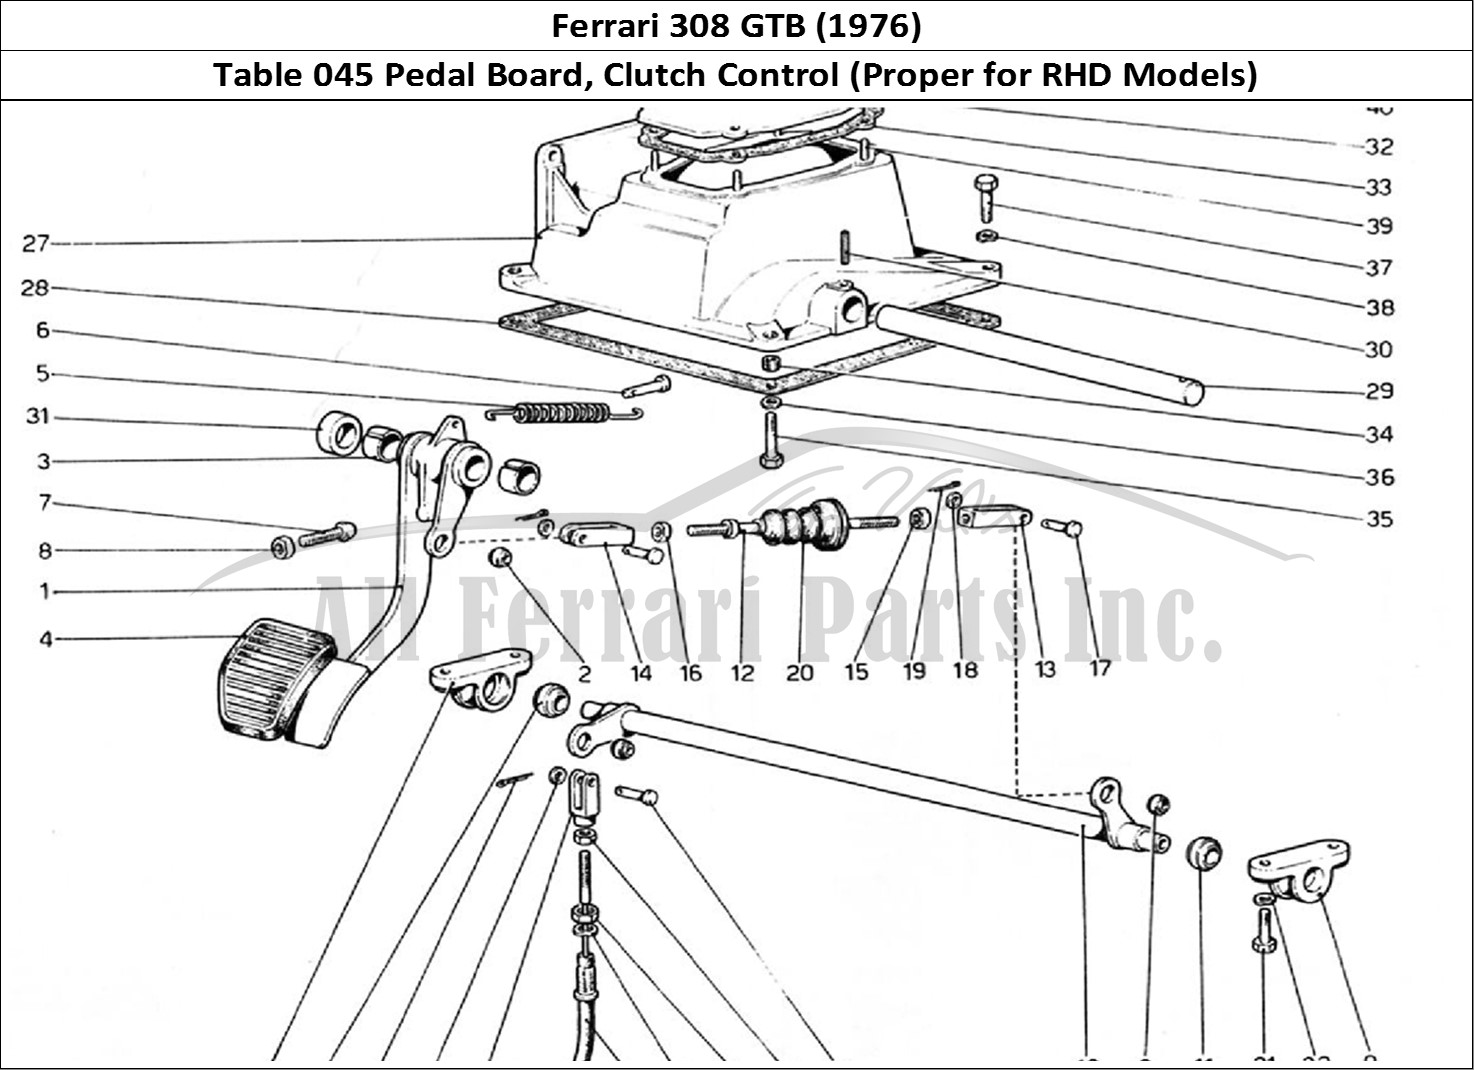 Ferrari Parts Ferrari 308 GTB (1976) Page 045 Pedal Board - Clutch Cont